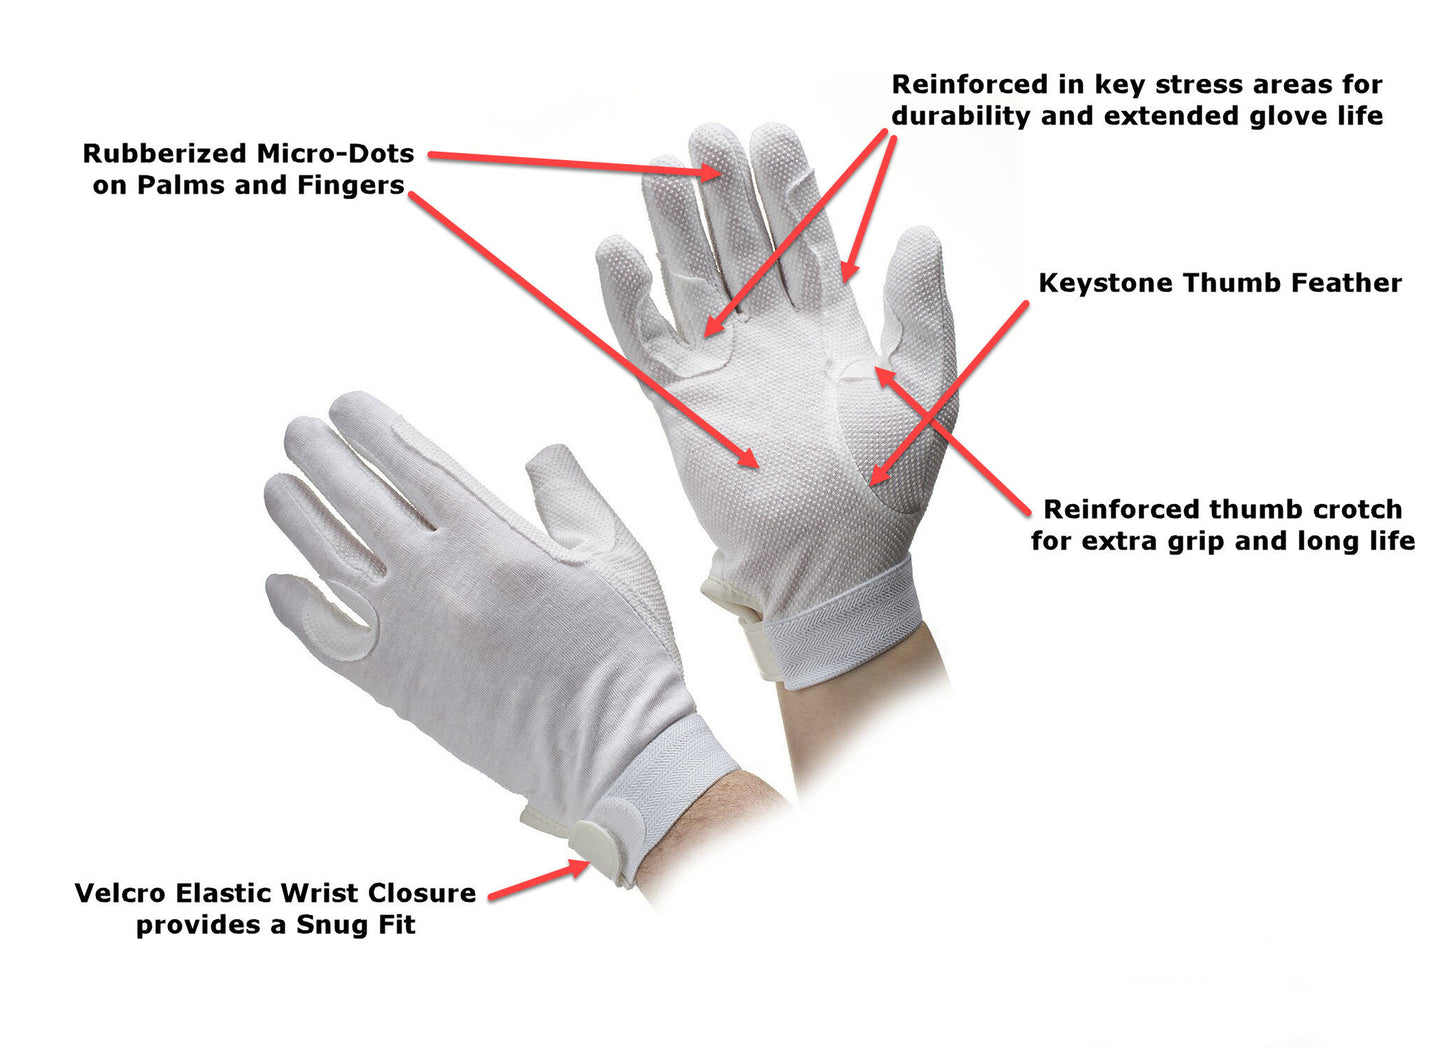 Cotton Performance Gloves - white